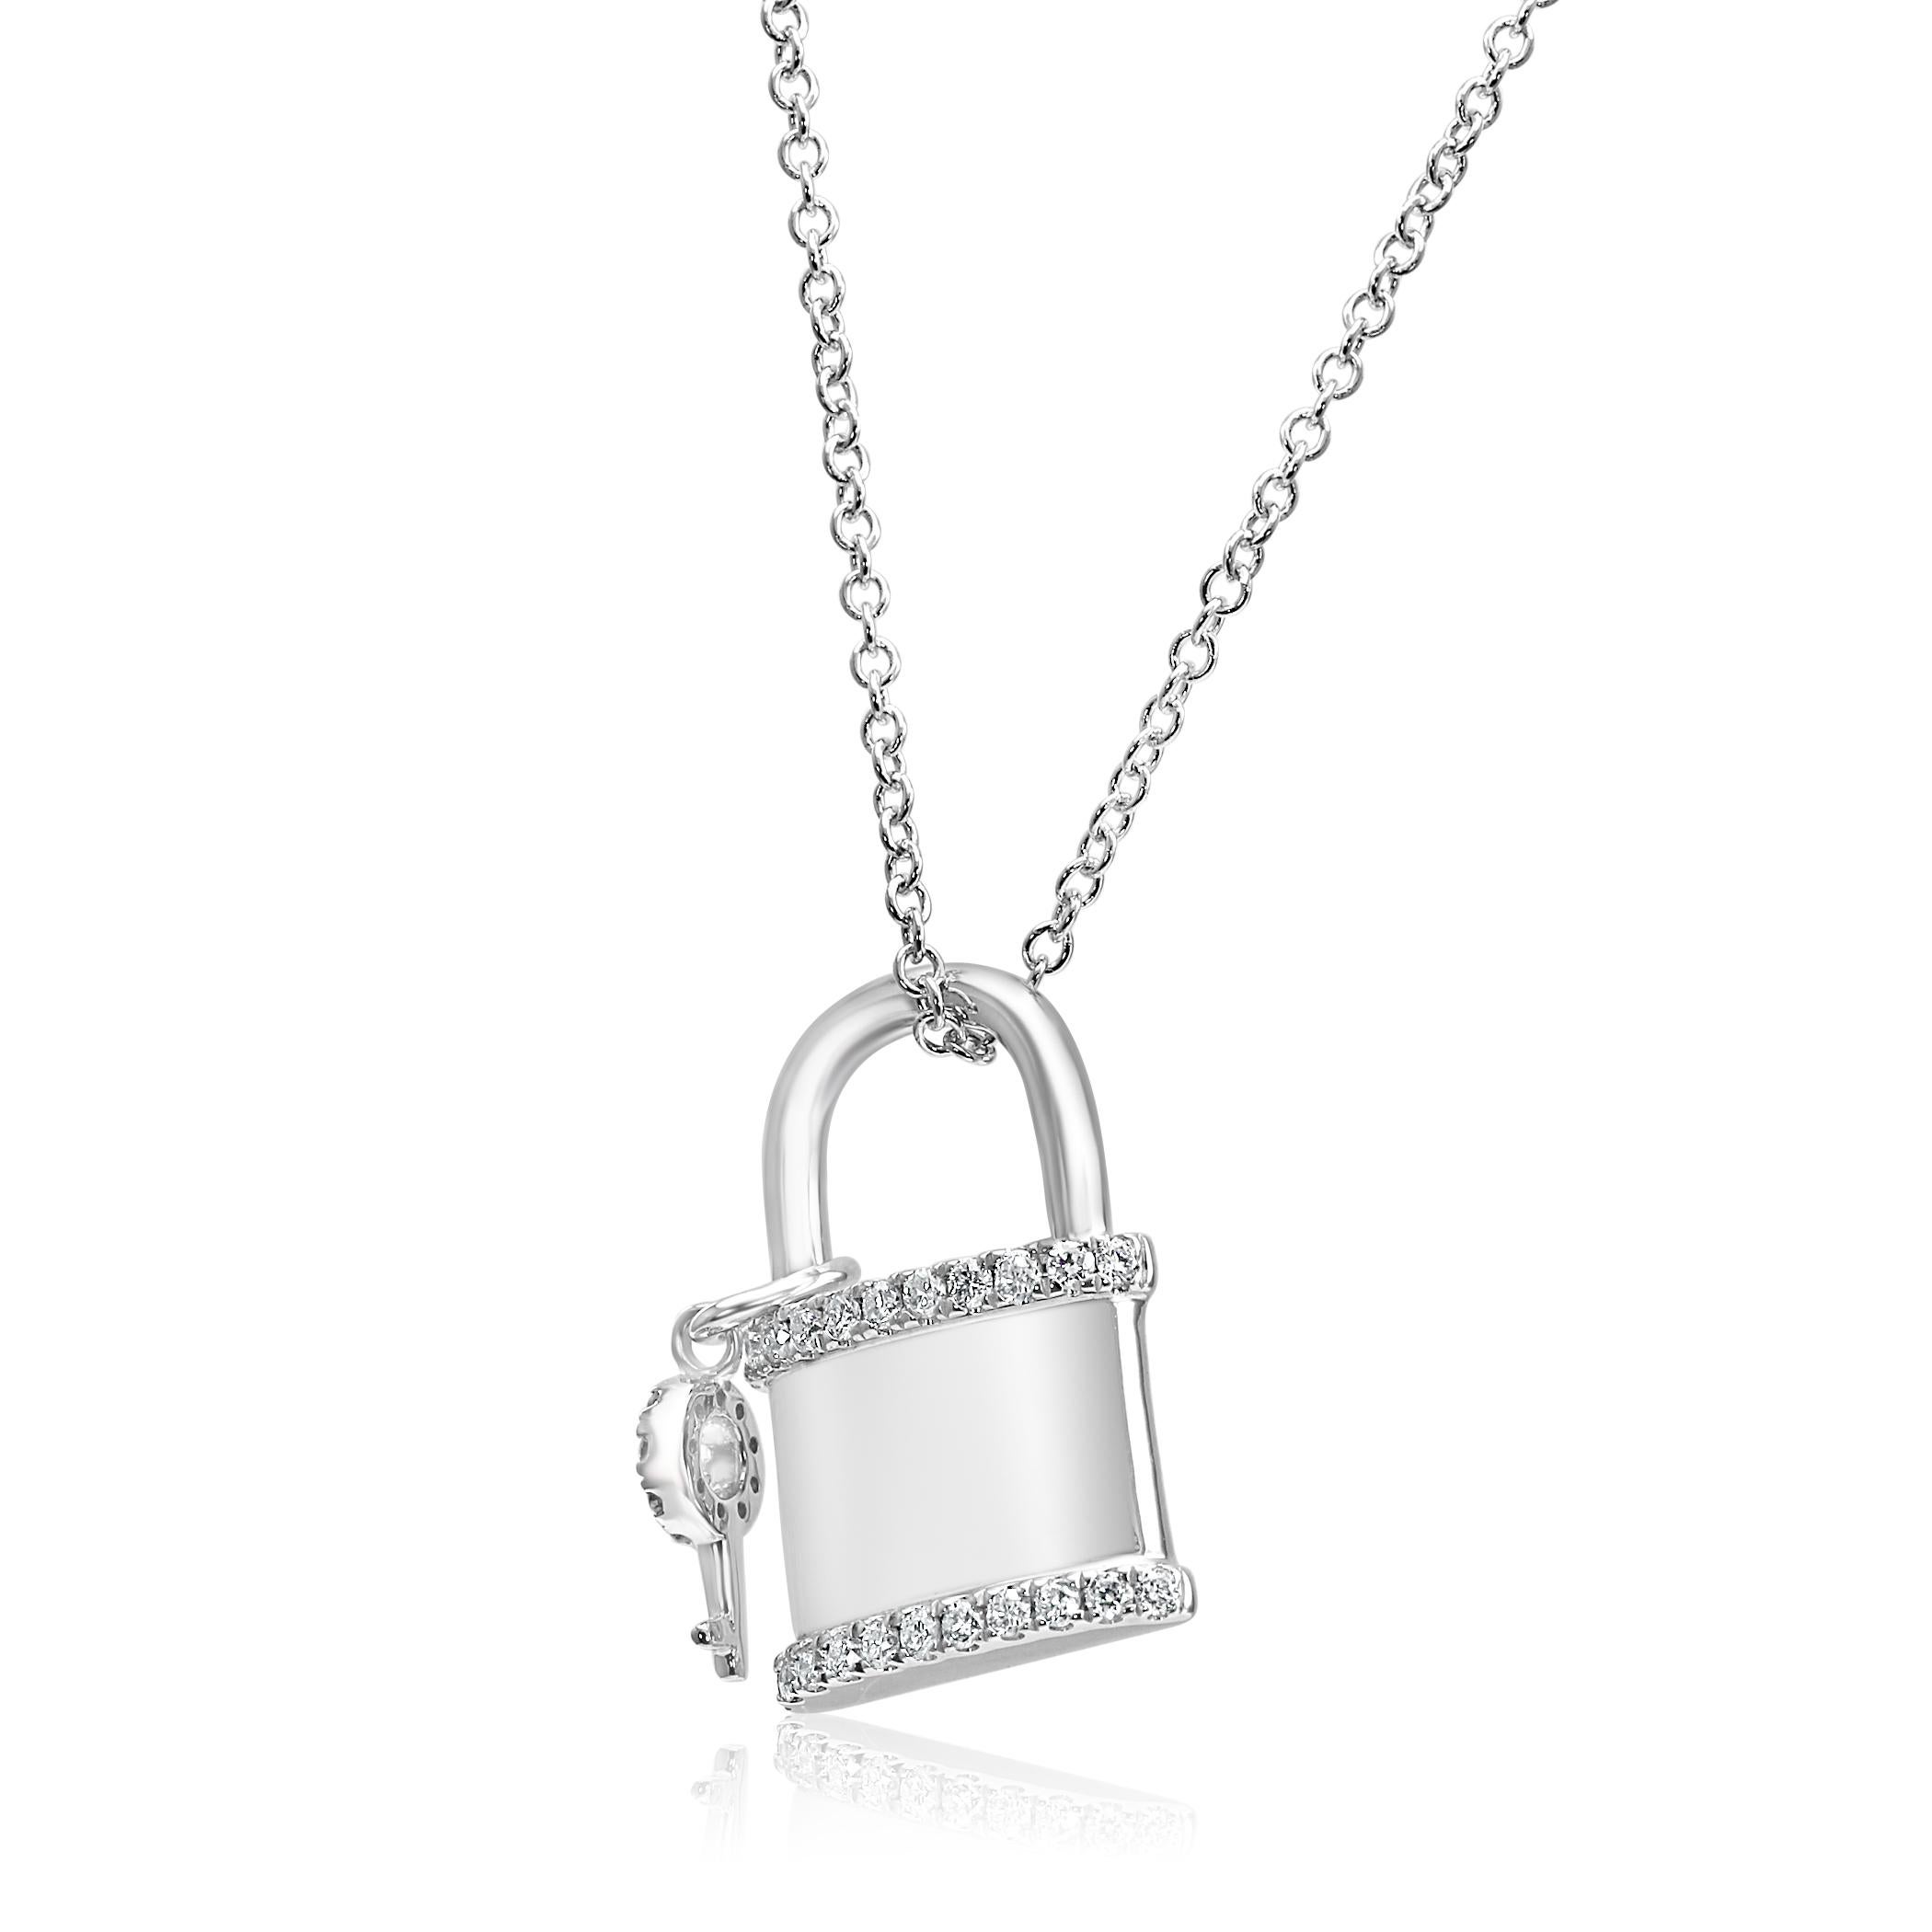 Contemporary White Diamond Round Fashion Lock and Key Pendant 14K White Gold Chain Necklace 